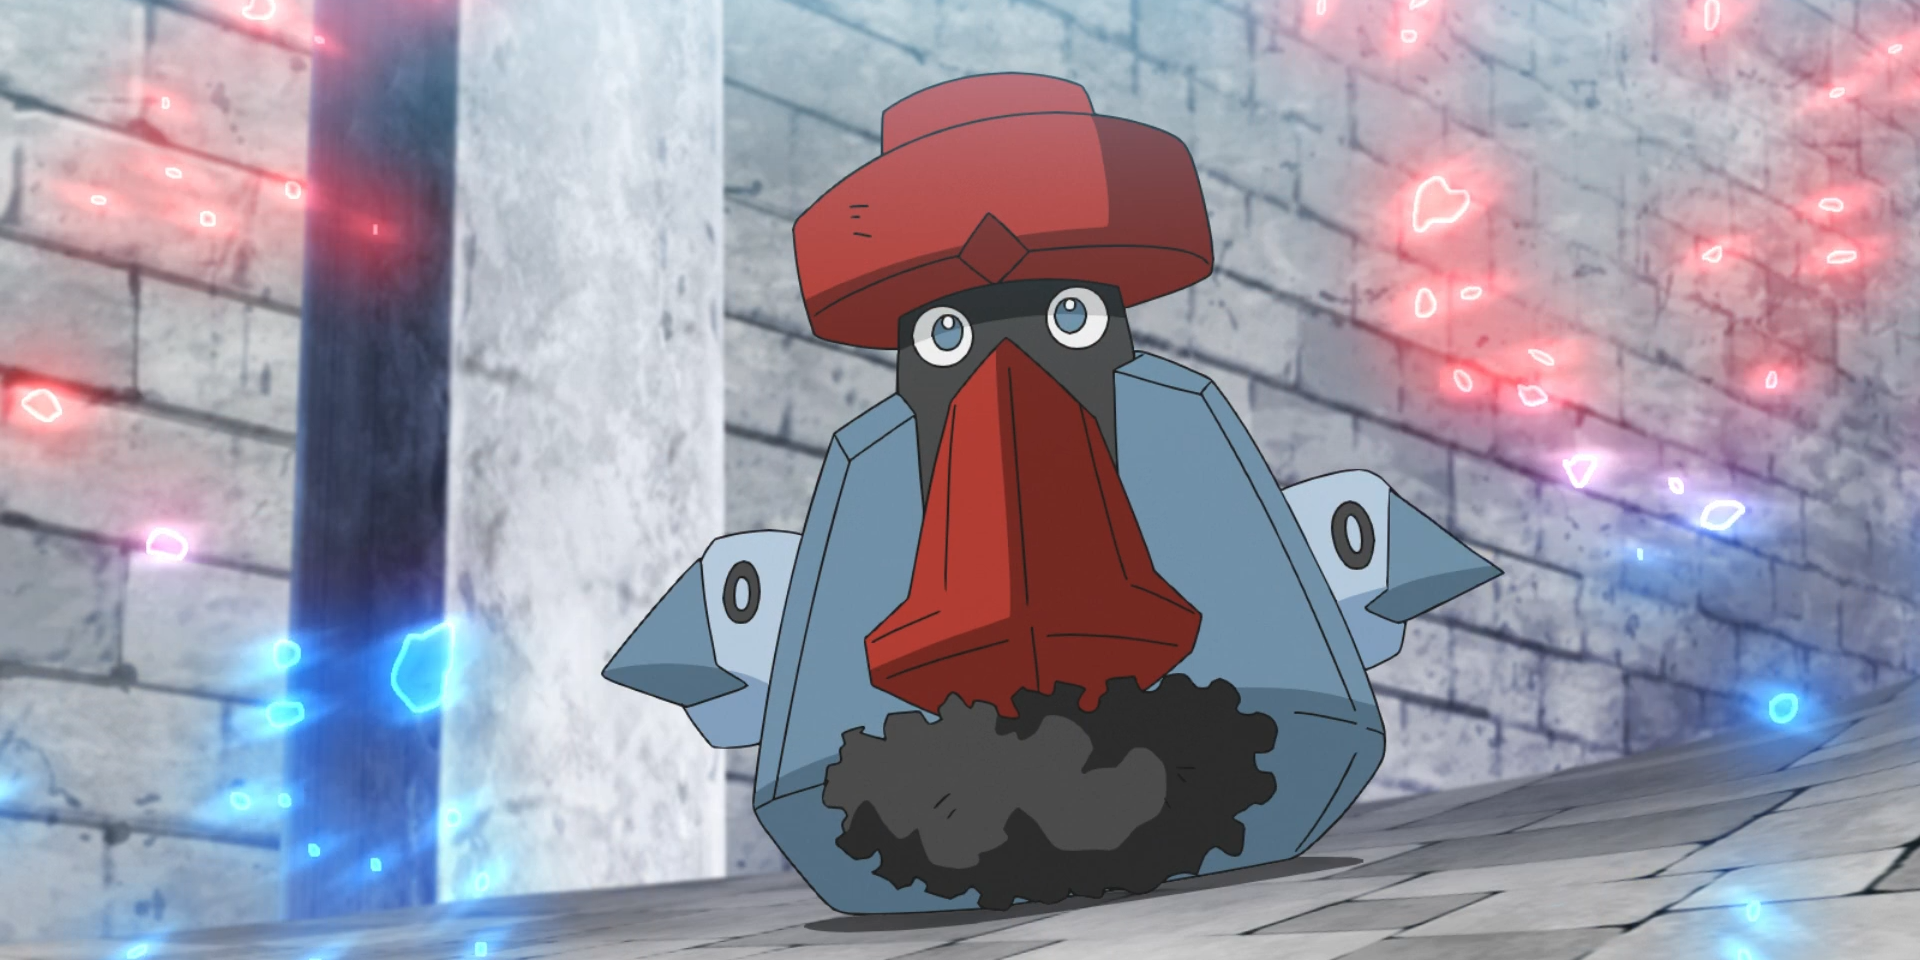 Probopass from the Pokémon anime series